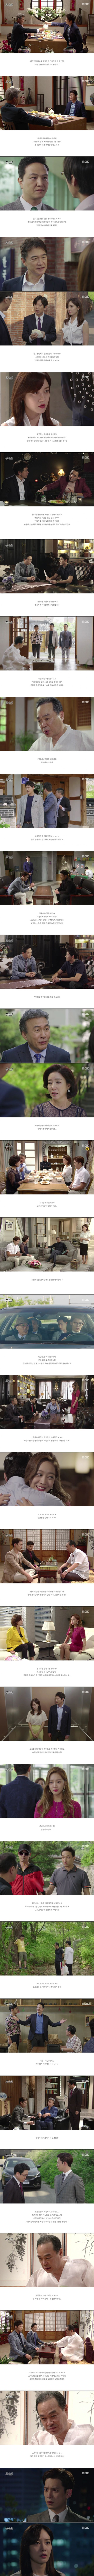 episode 41 captures for the Korean drama 'Monster - 2016'